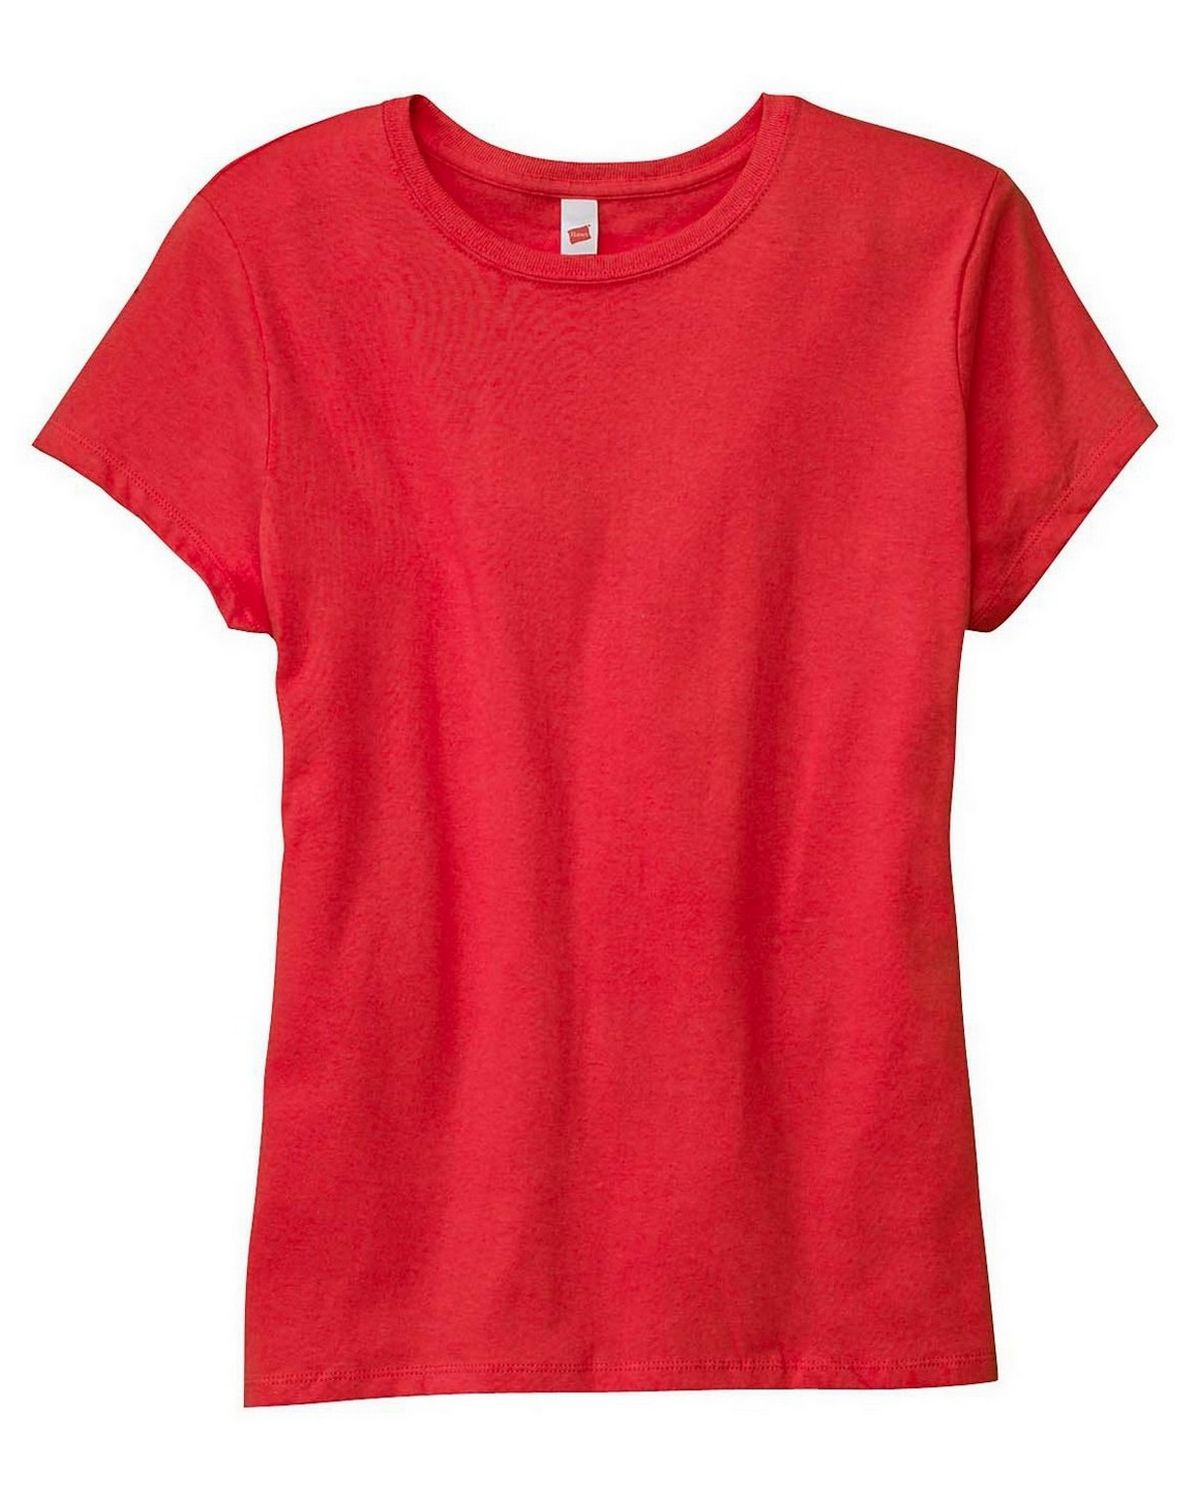 Hanes 5680 Ladies ComfortSoft Cotton T-Shirt